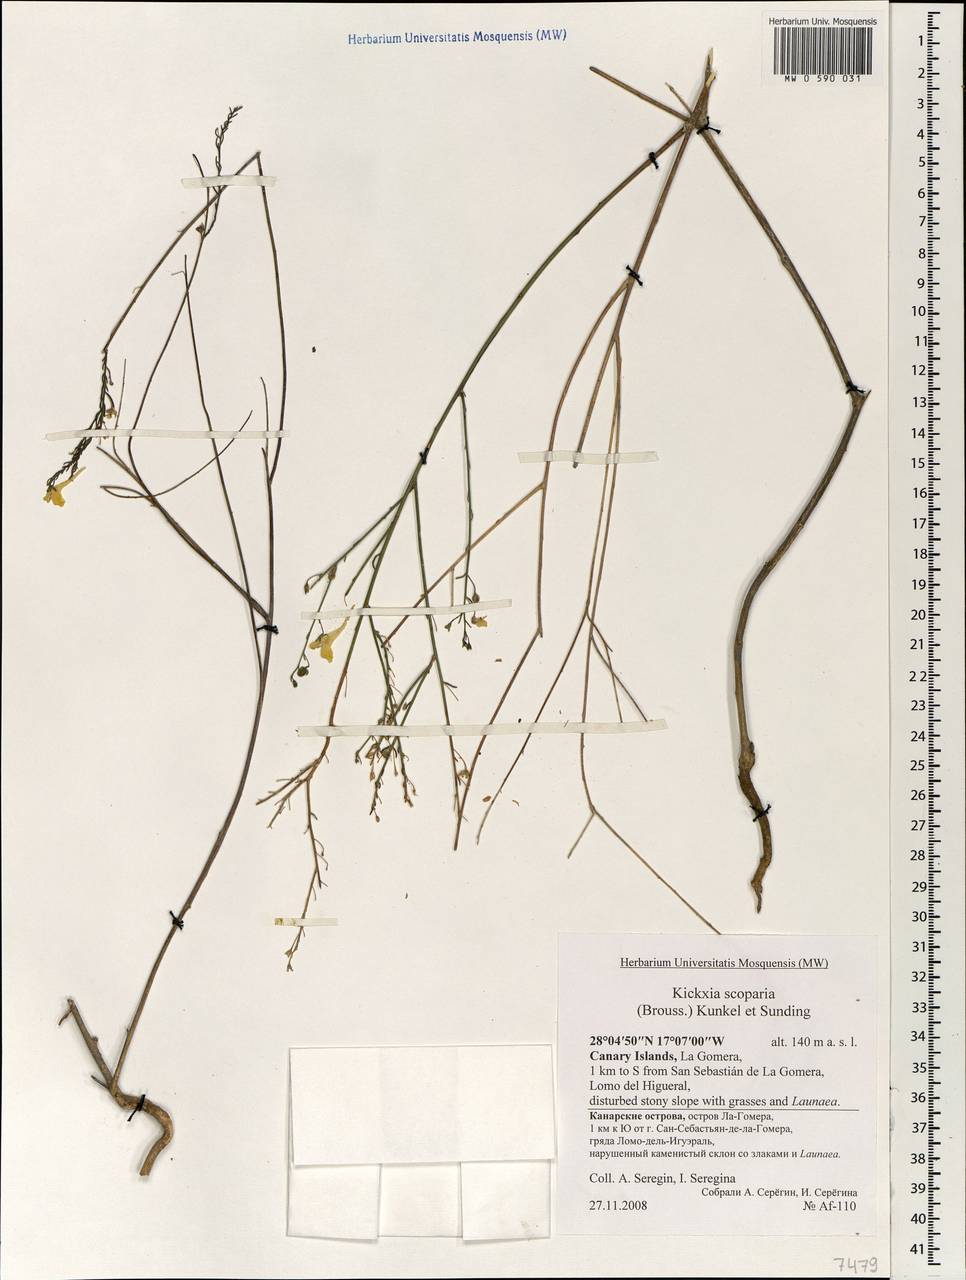 Nanorrhinum scoparium (Brouss. ex Spreng.) Yousefi & Zarre, Африка (AFR) (Испания)